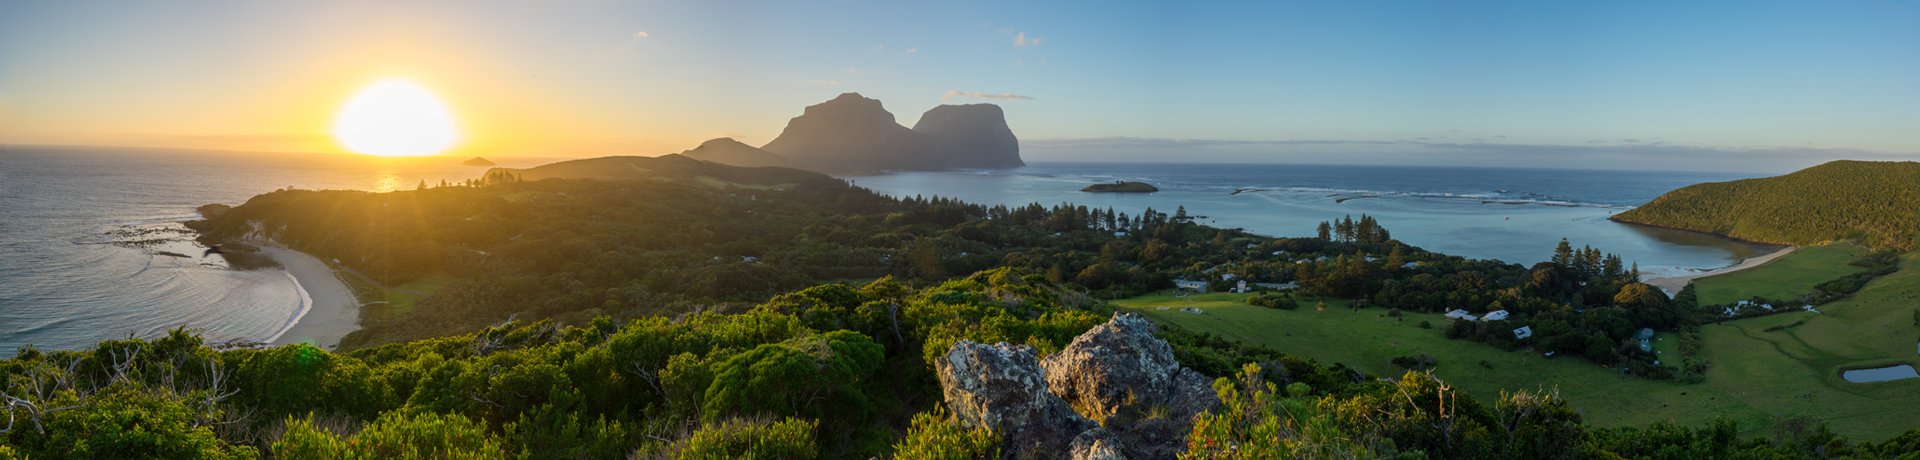 Lord Howe Island, NSW, Australia